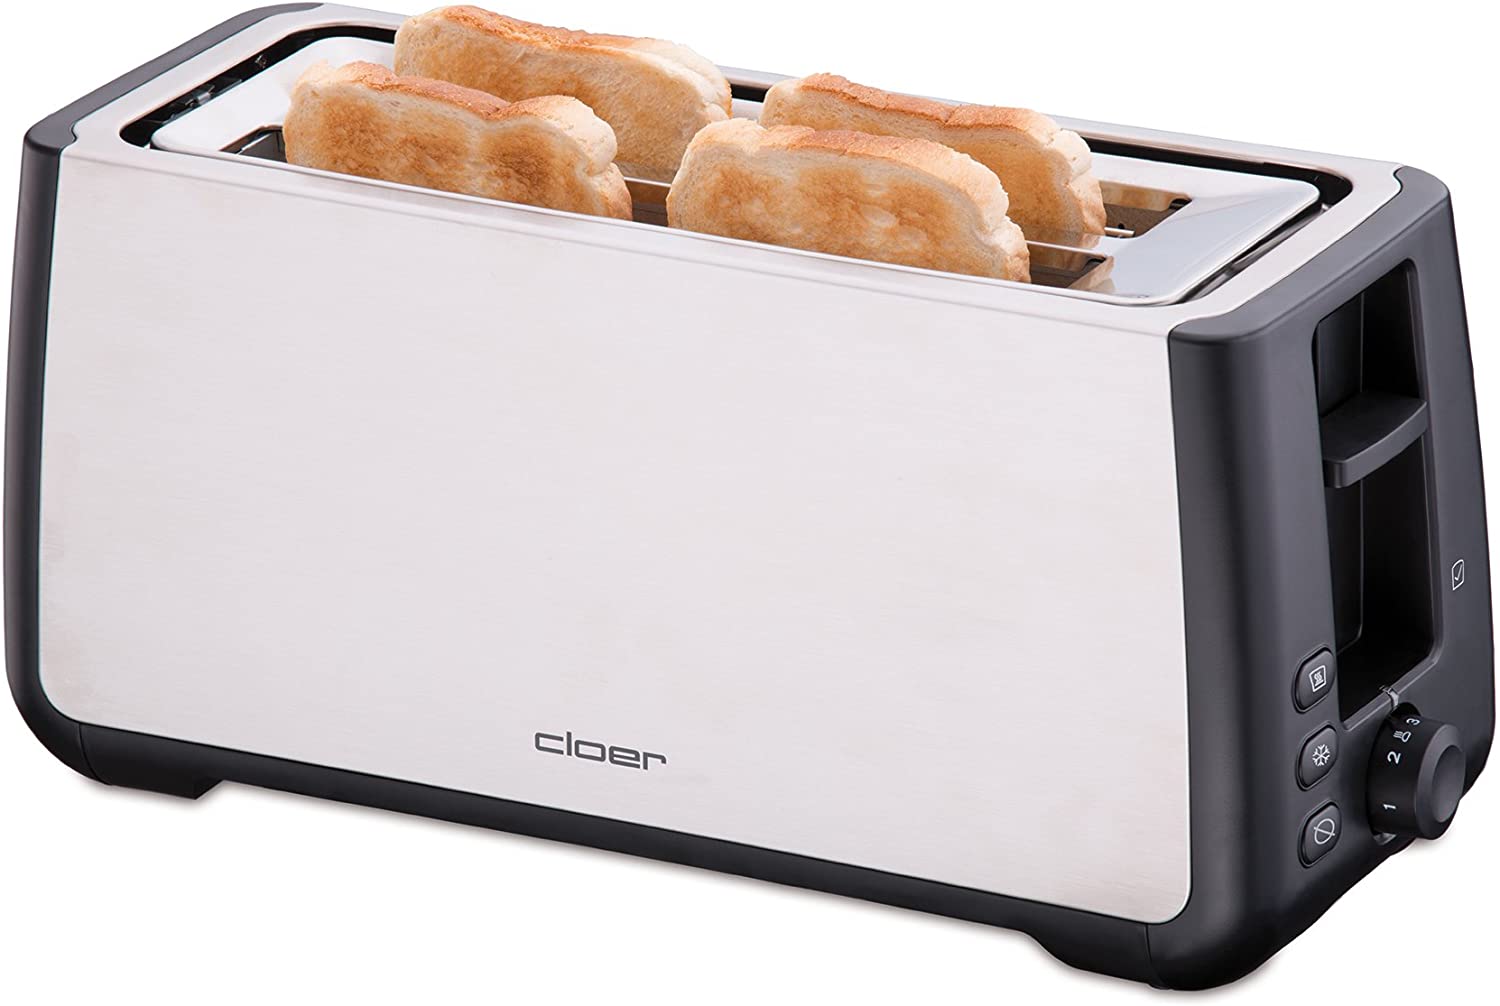 Cloer 3579 King-Size Toaster for 4 XXL Slices / Check Function / Stainless Steel Housing / 1500 Watt / Black Plastic